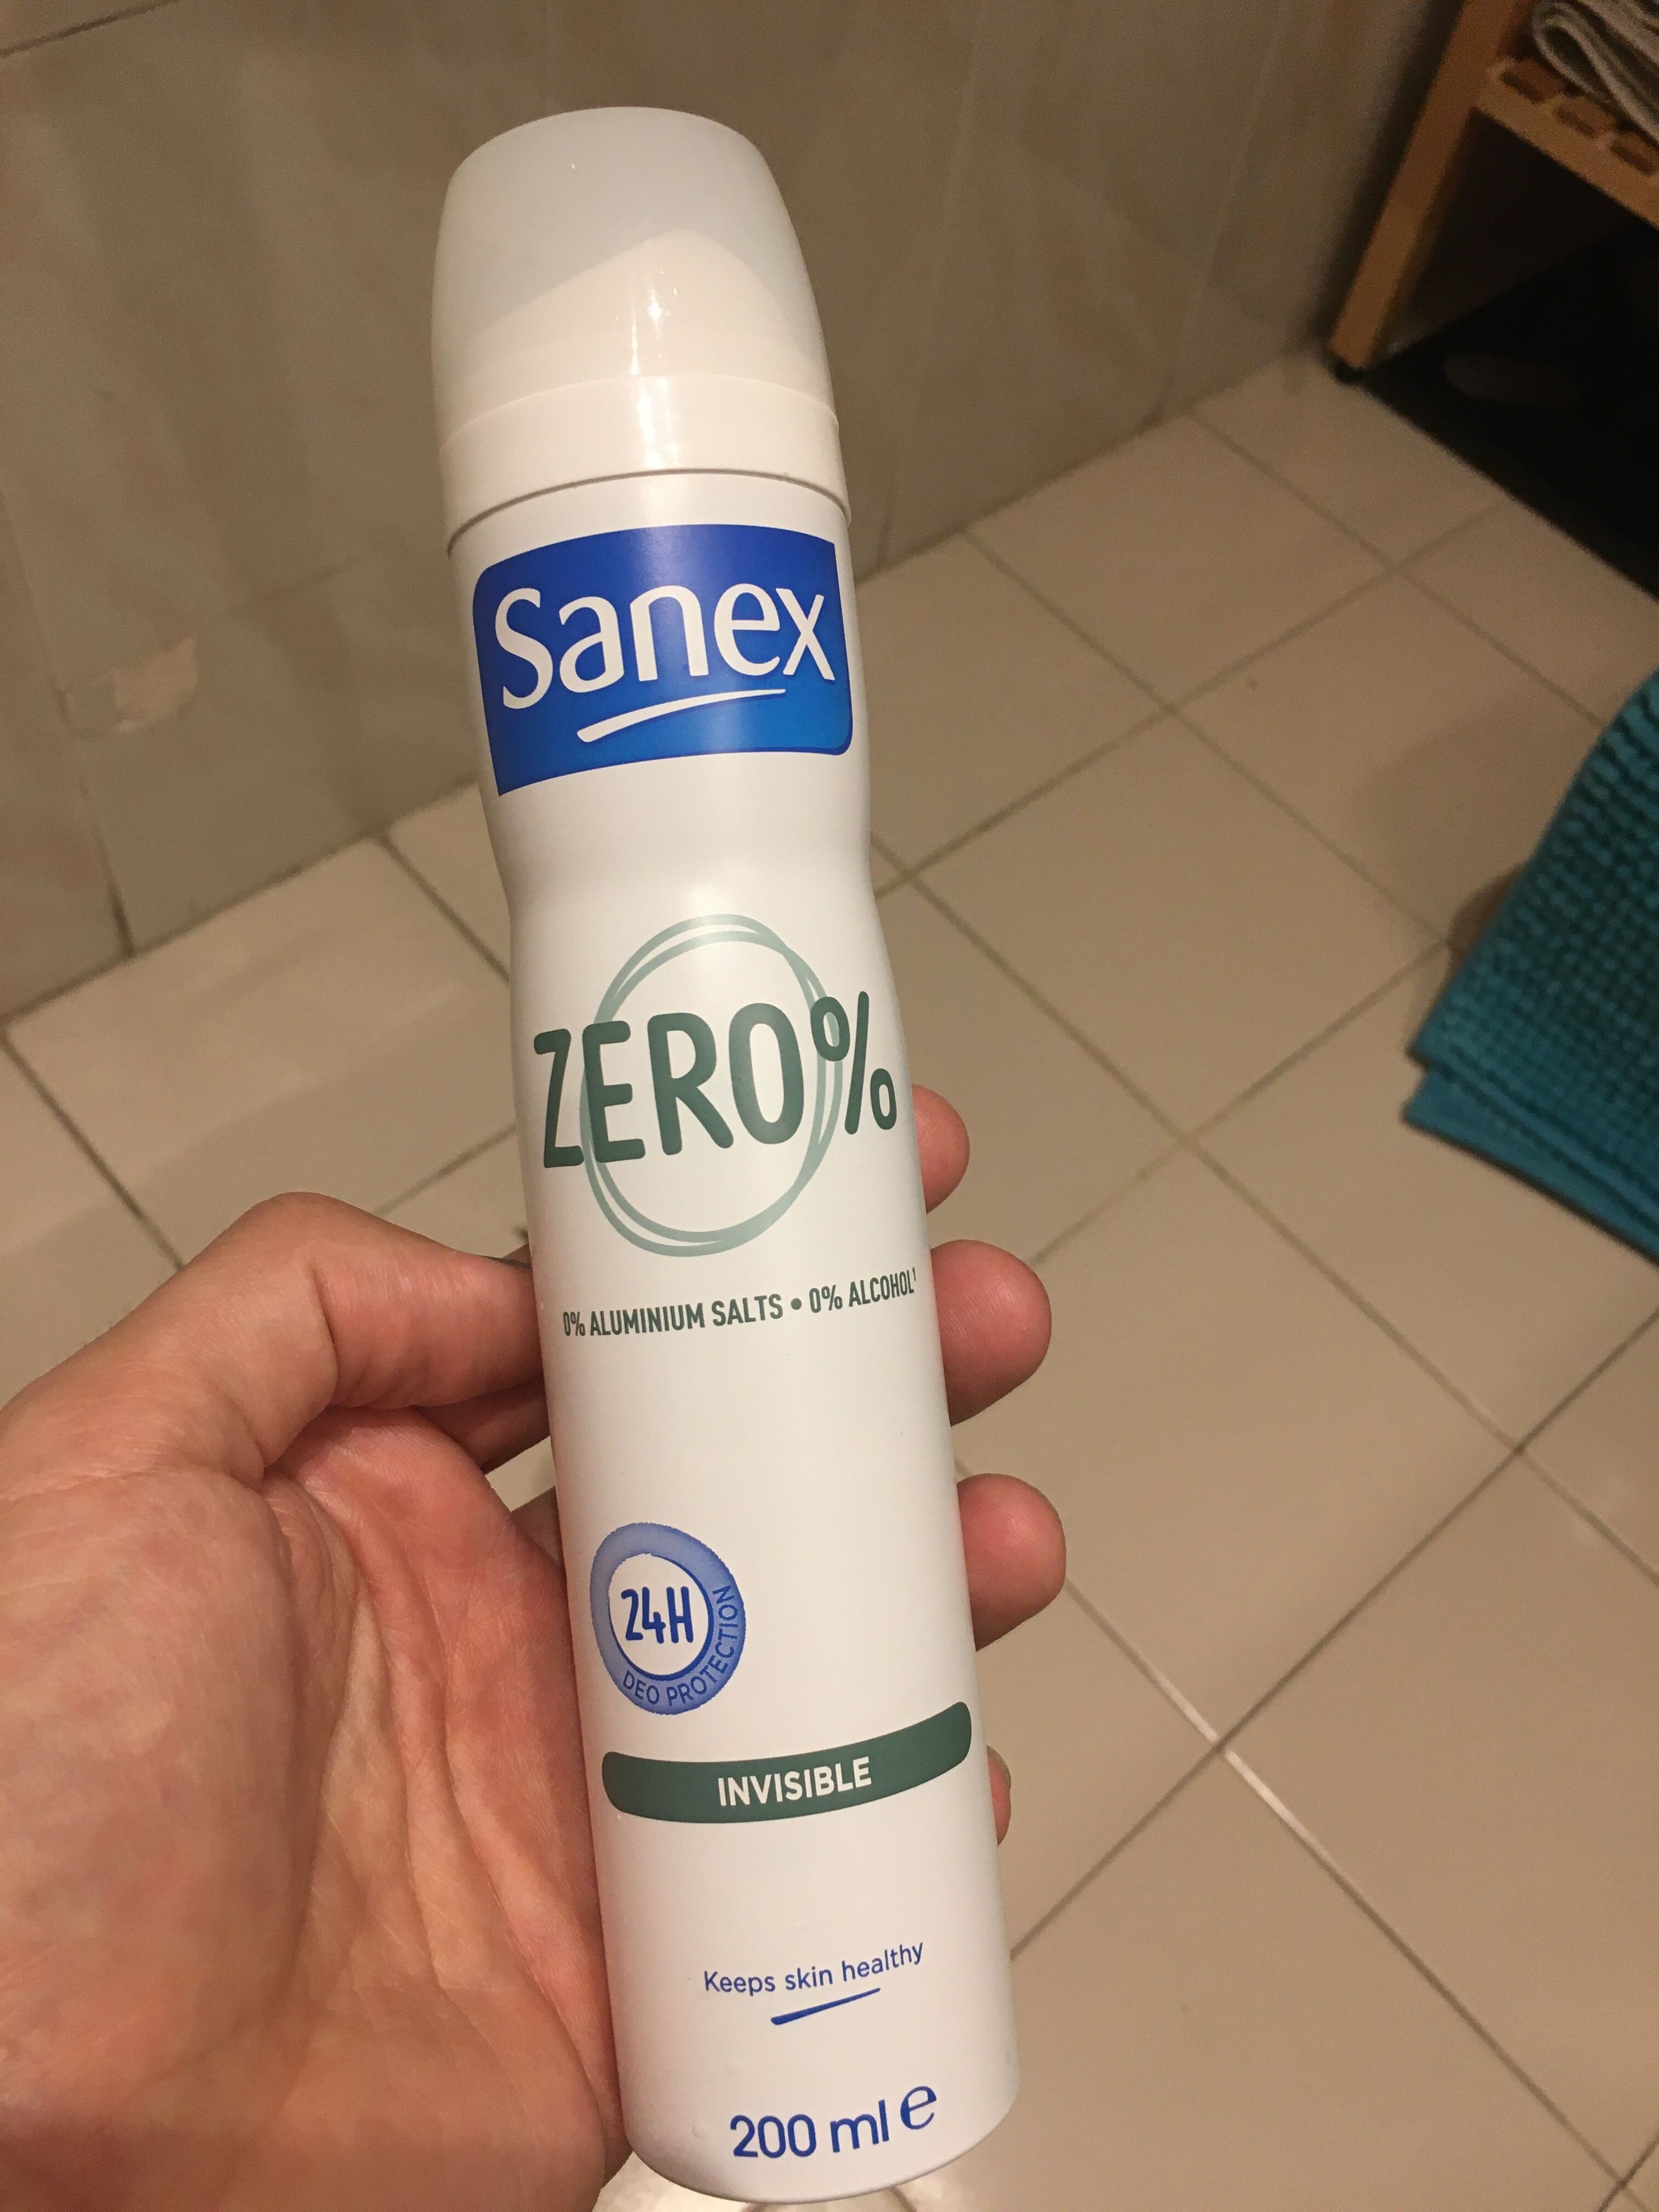 Sanex zero% - Produkt - en